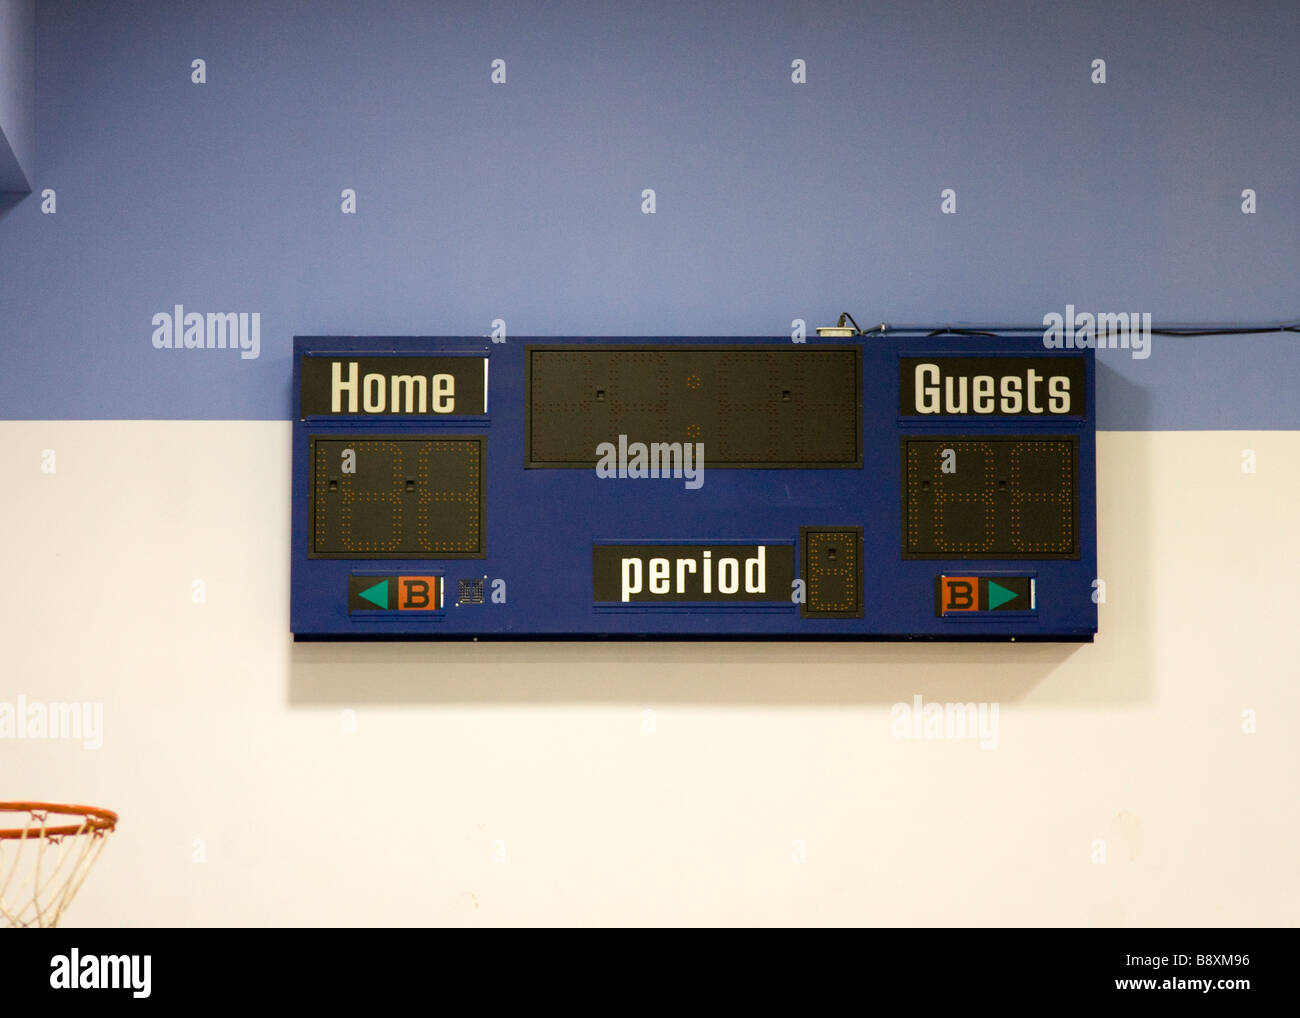 Indoor Sports Scoreboard in Gymnasium Stock Photo